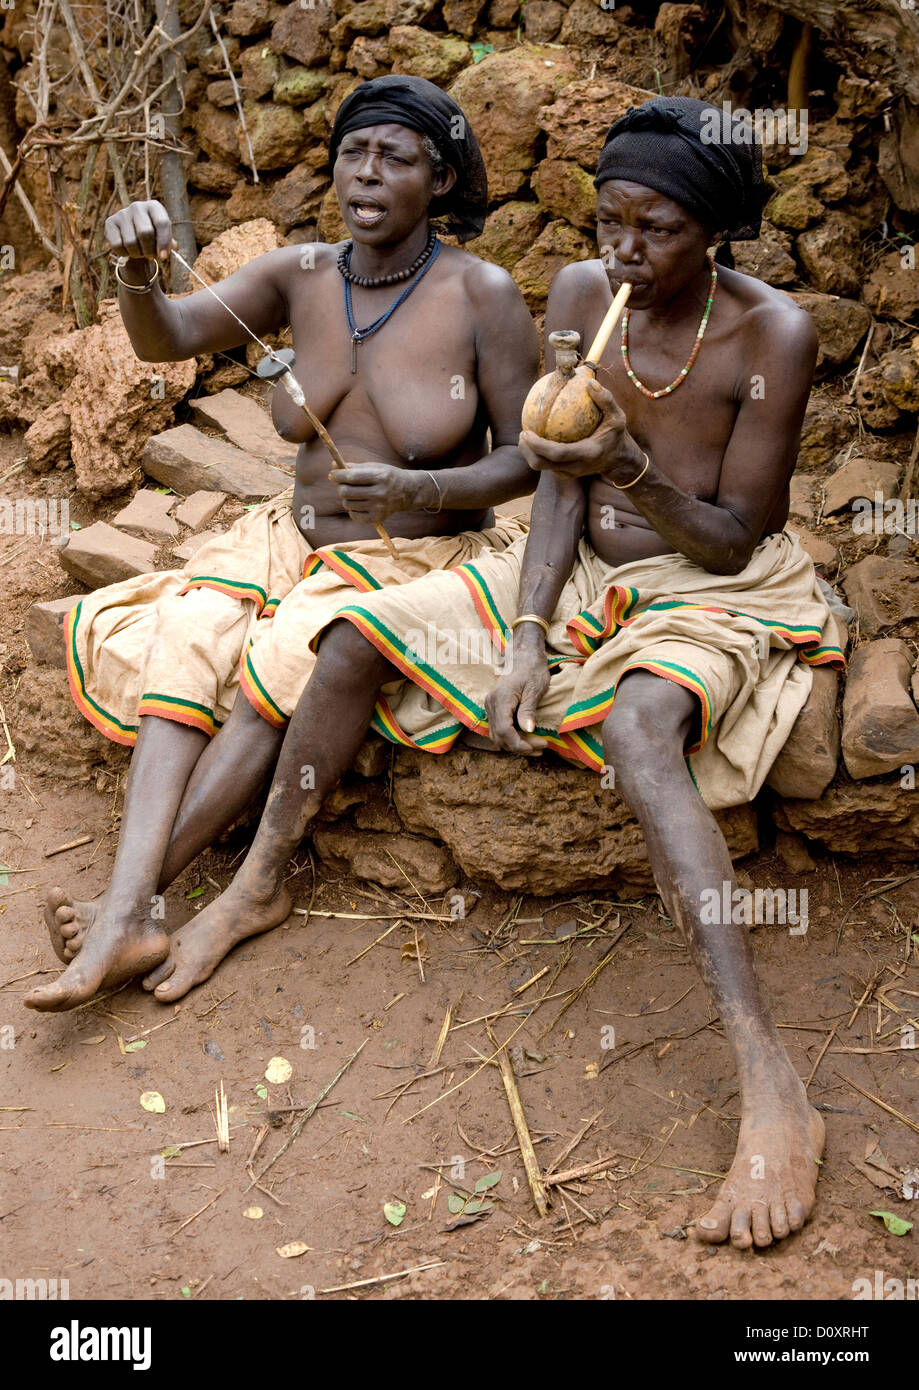 Africa naked tribe